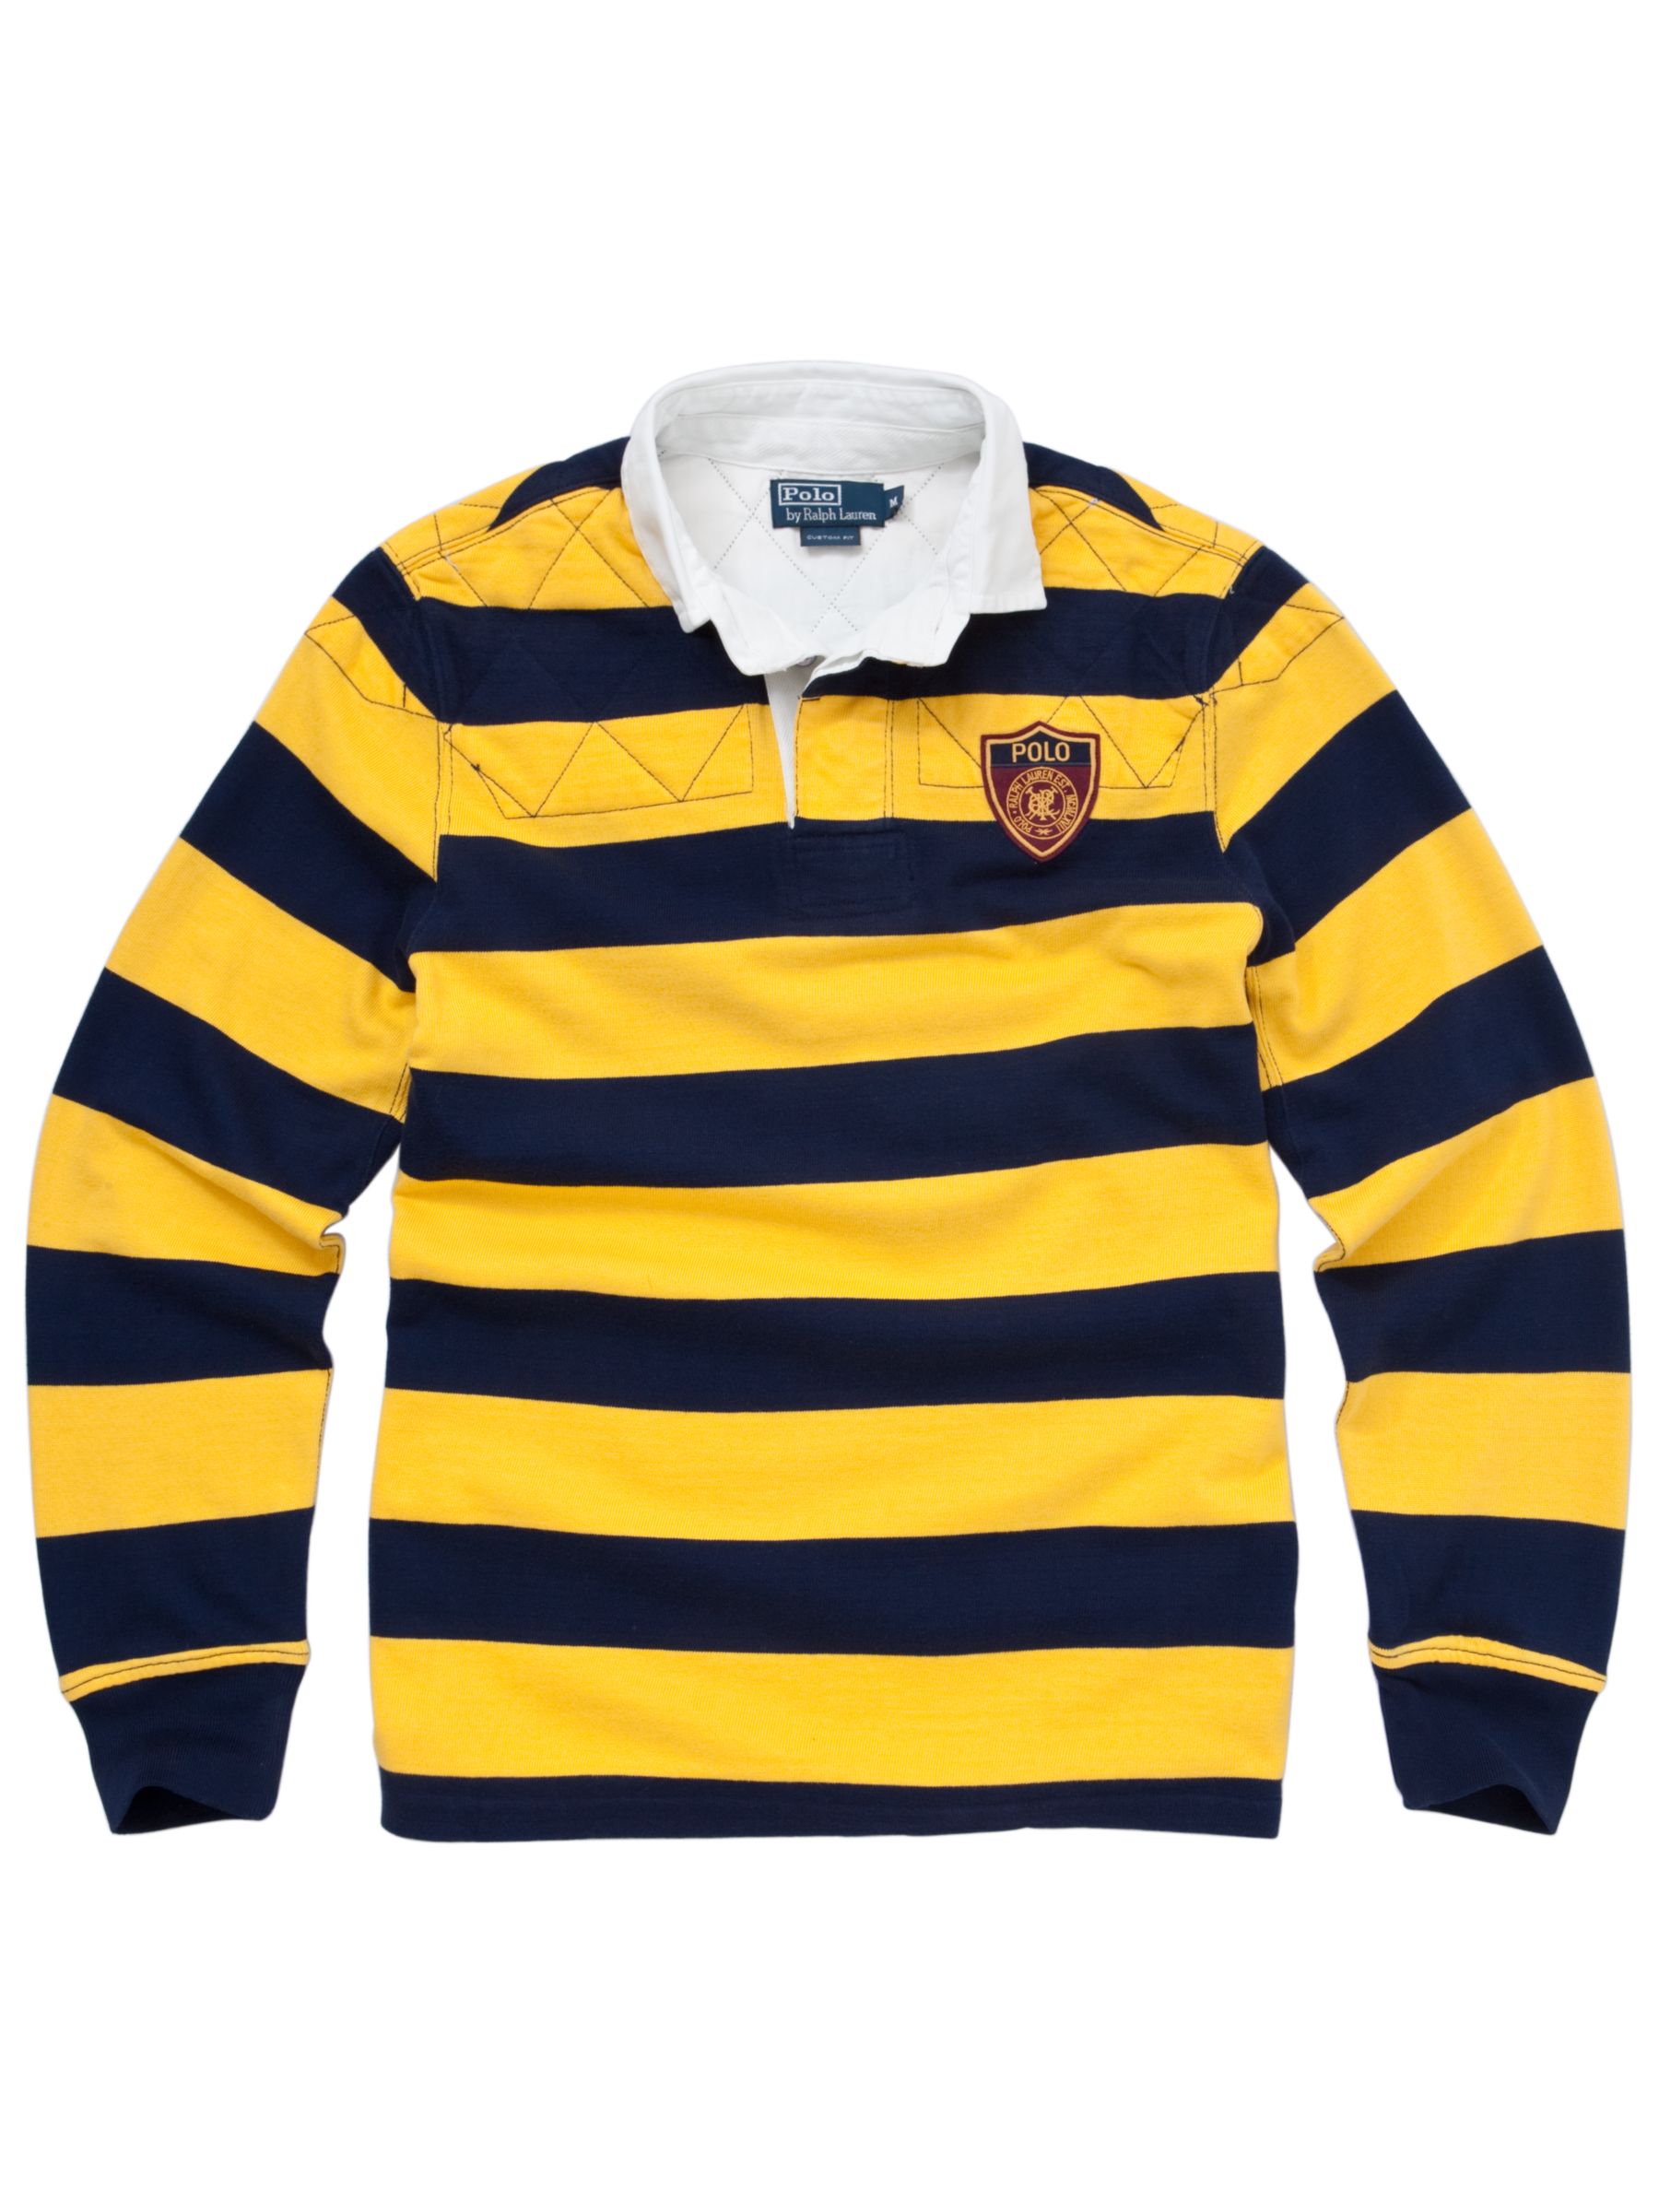 Polo Ralph Lauren Stripe Rugby Shirt, Yellow/Navy